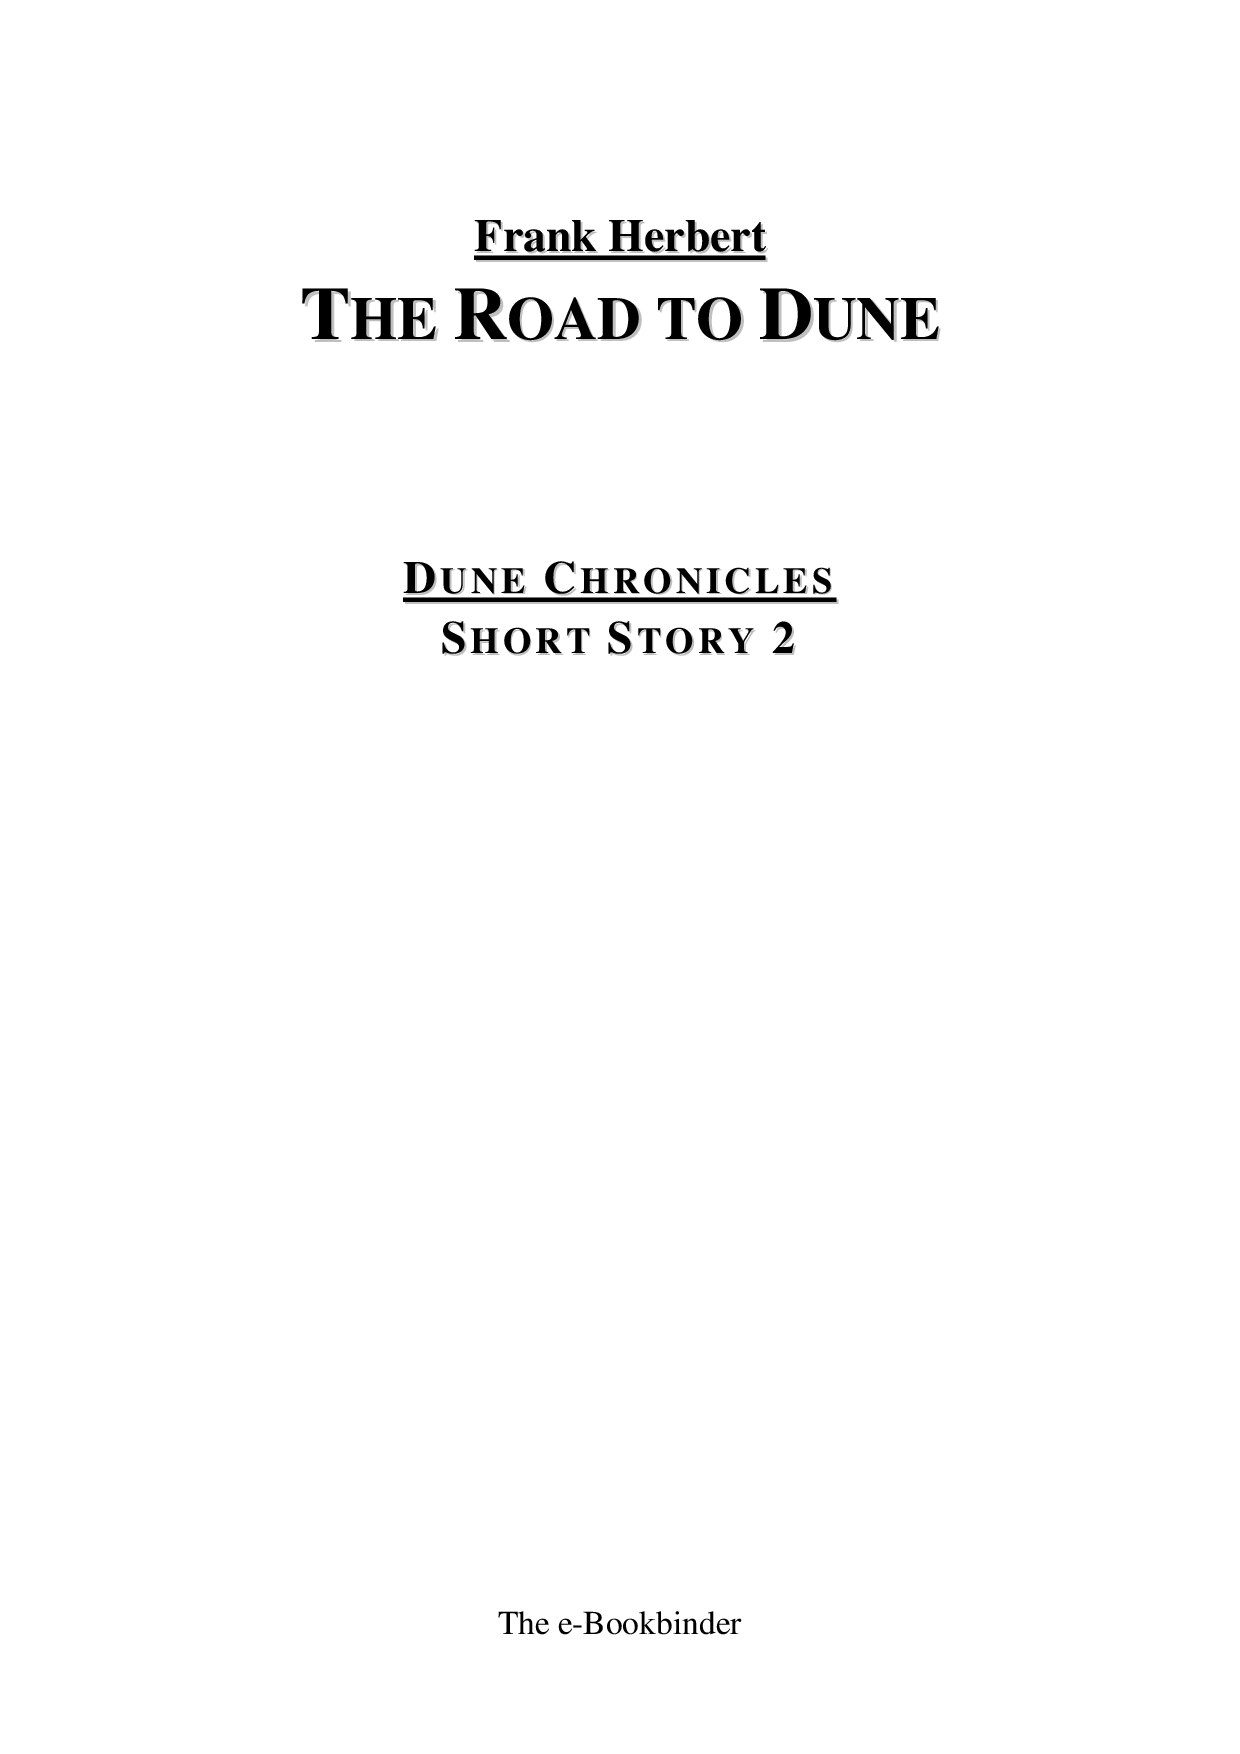 Frank Herbert - Dune Chronicles SS 02 - The Road to Dune